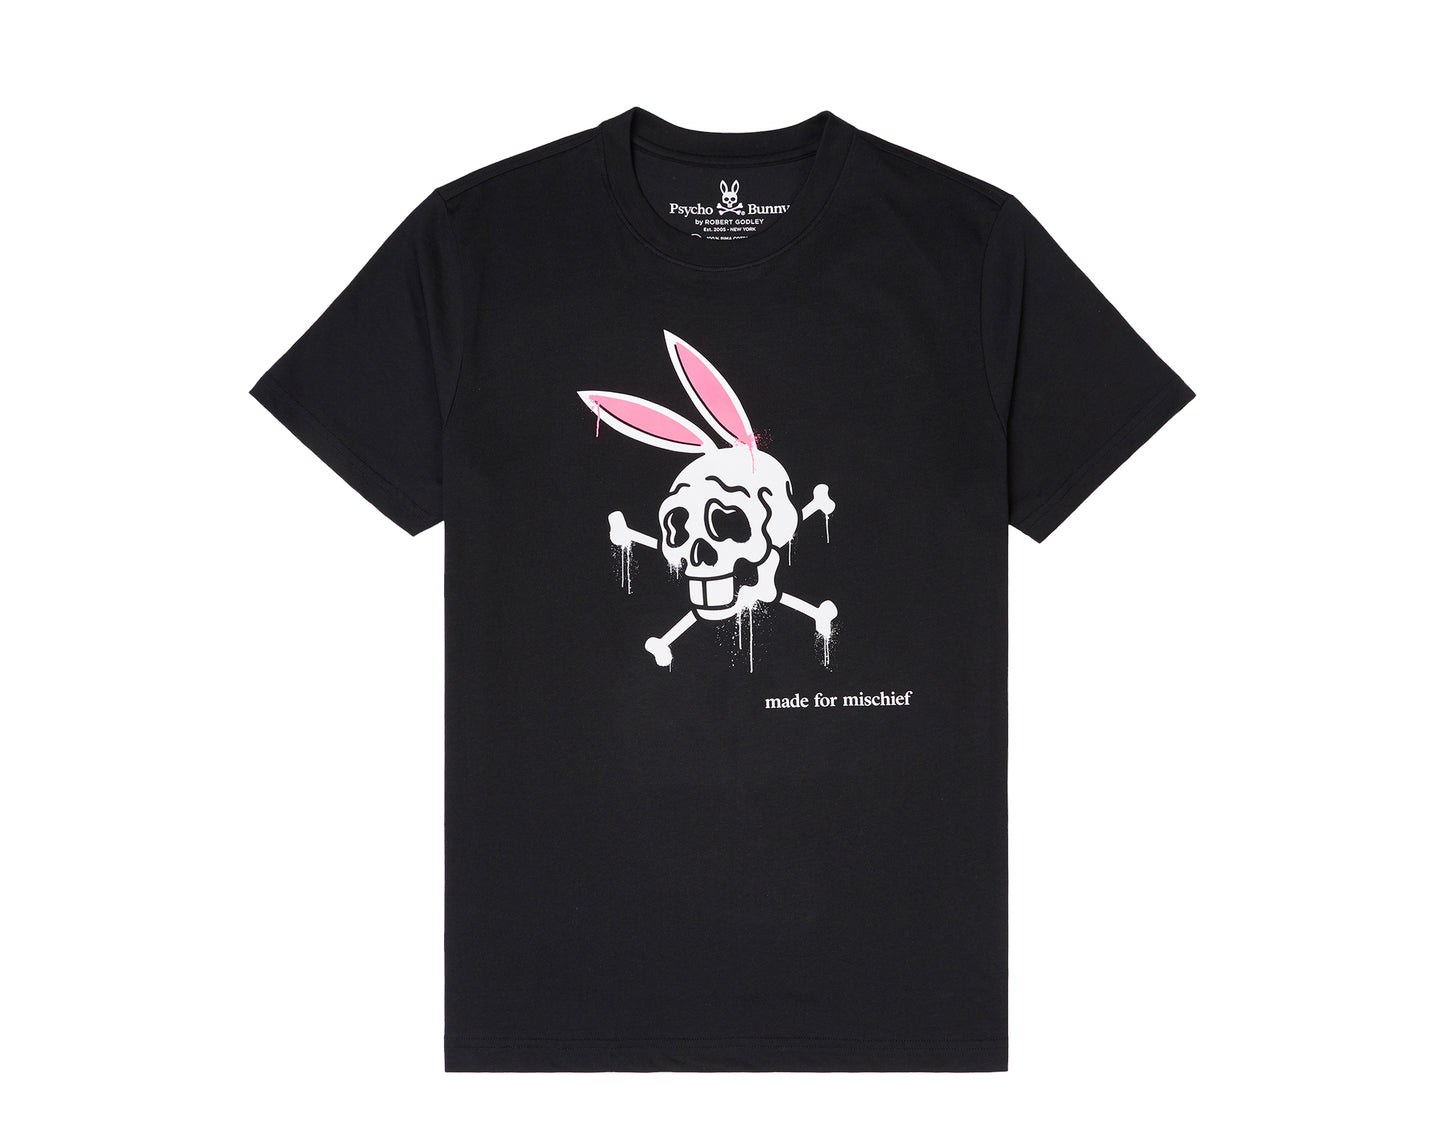 Psycho Bunny Gorton Graphic Men's Tee Shirt